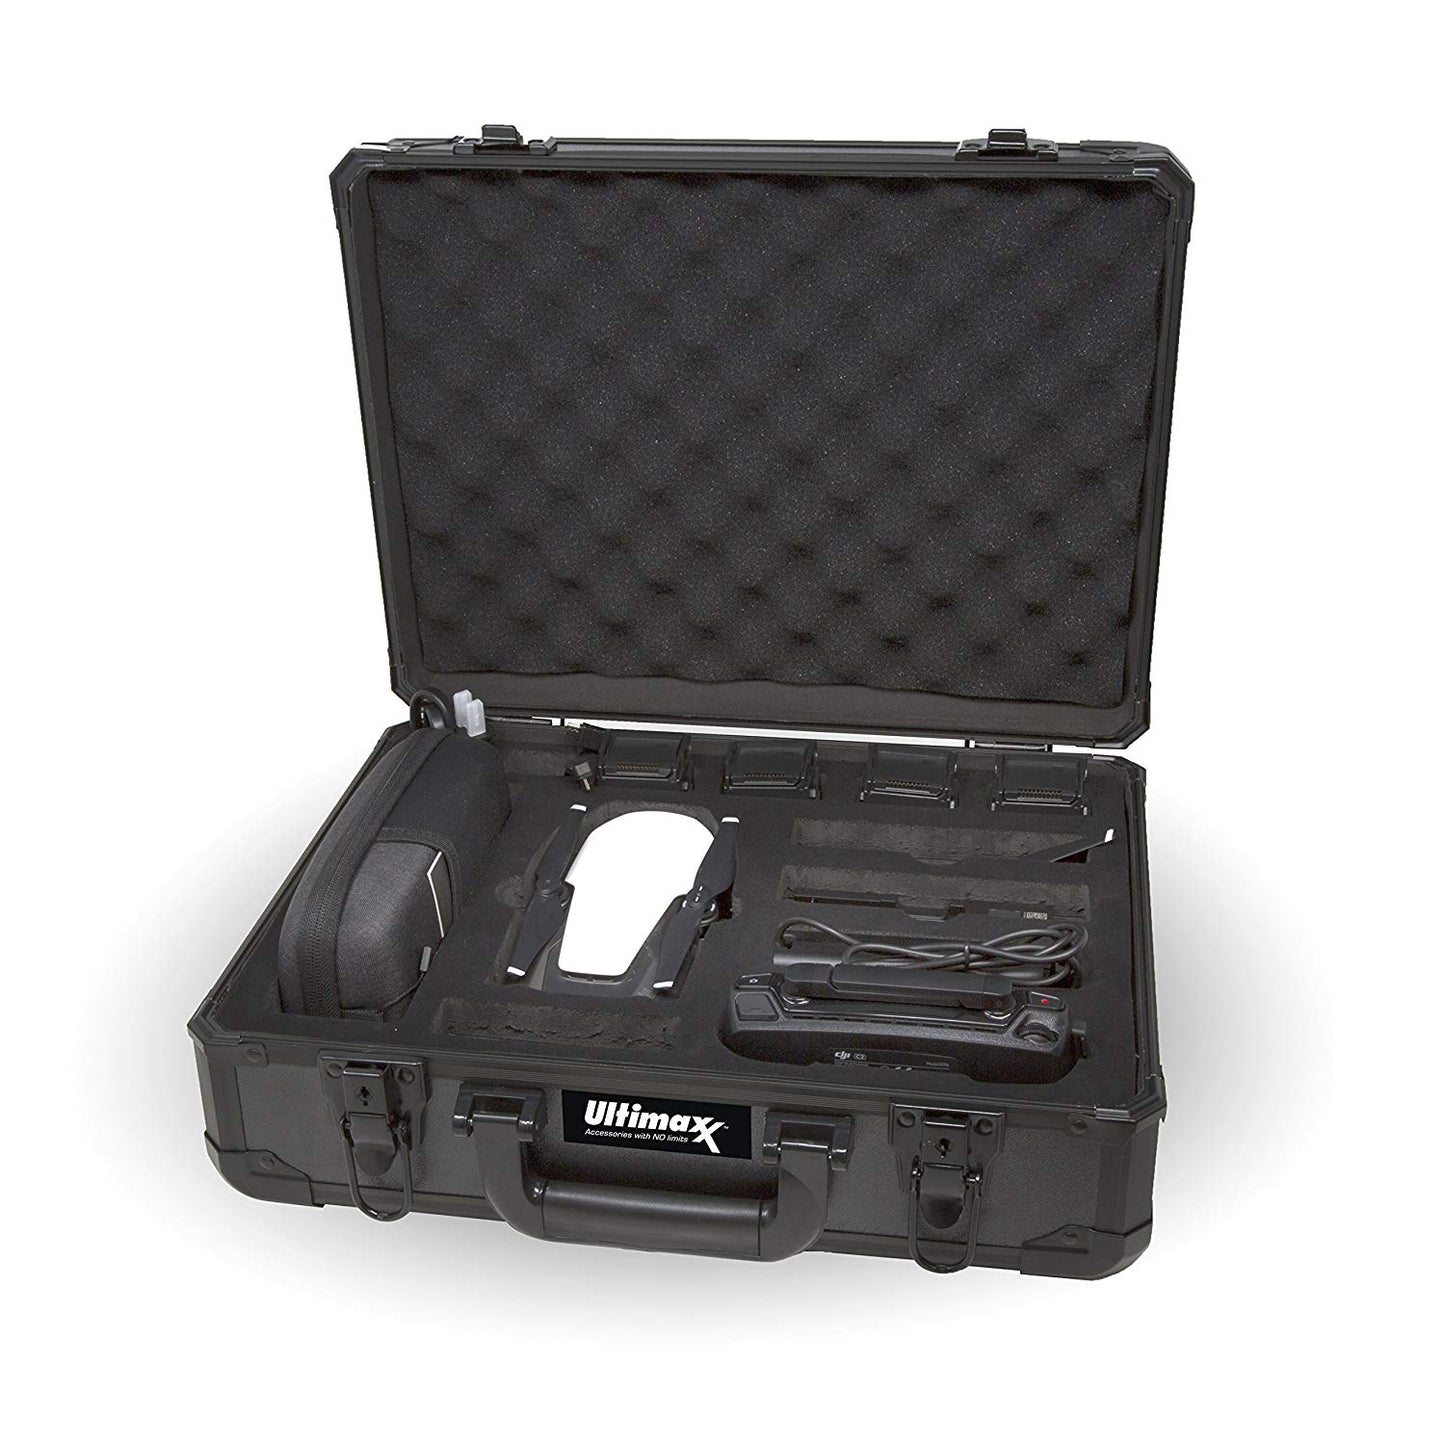 DJI Mavic Air Accessory Bundle Includes Case Vest Props Filter Kit Charger +More